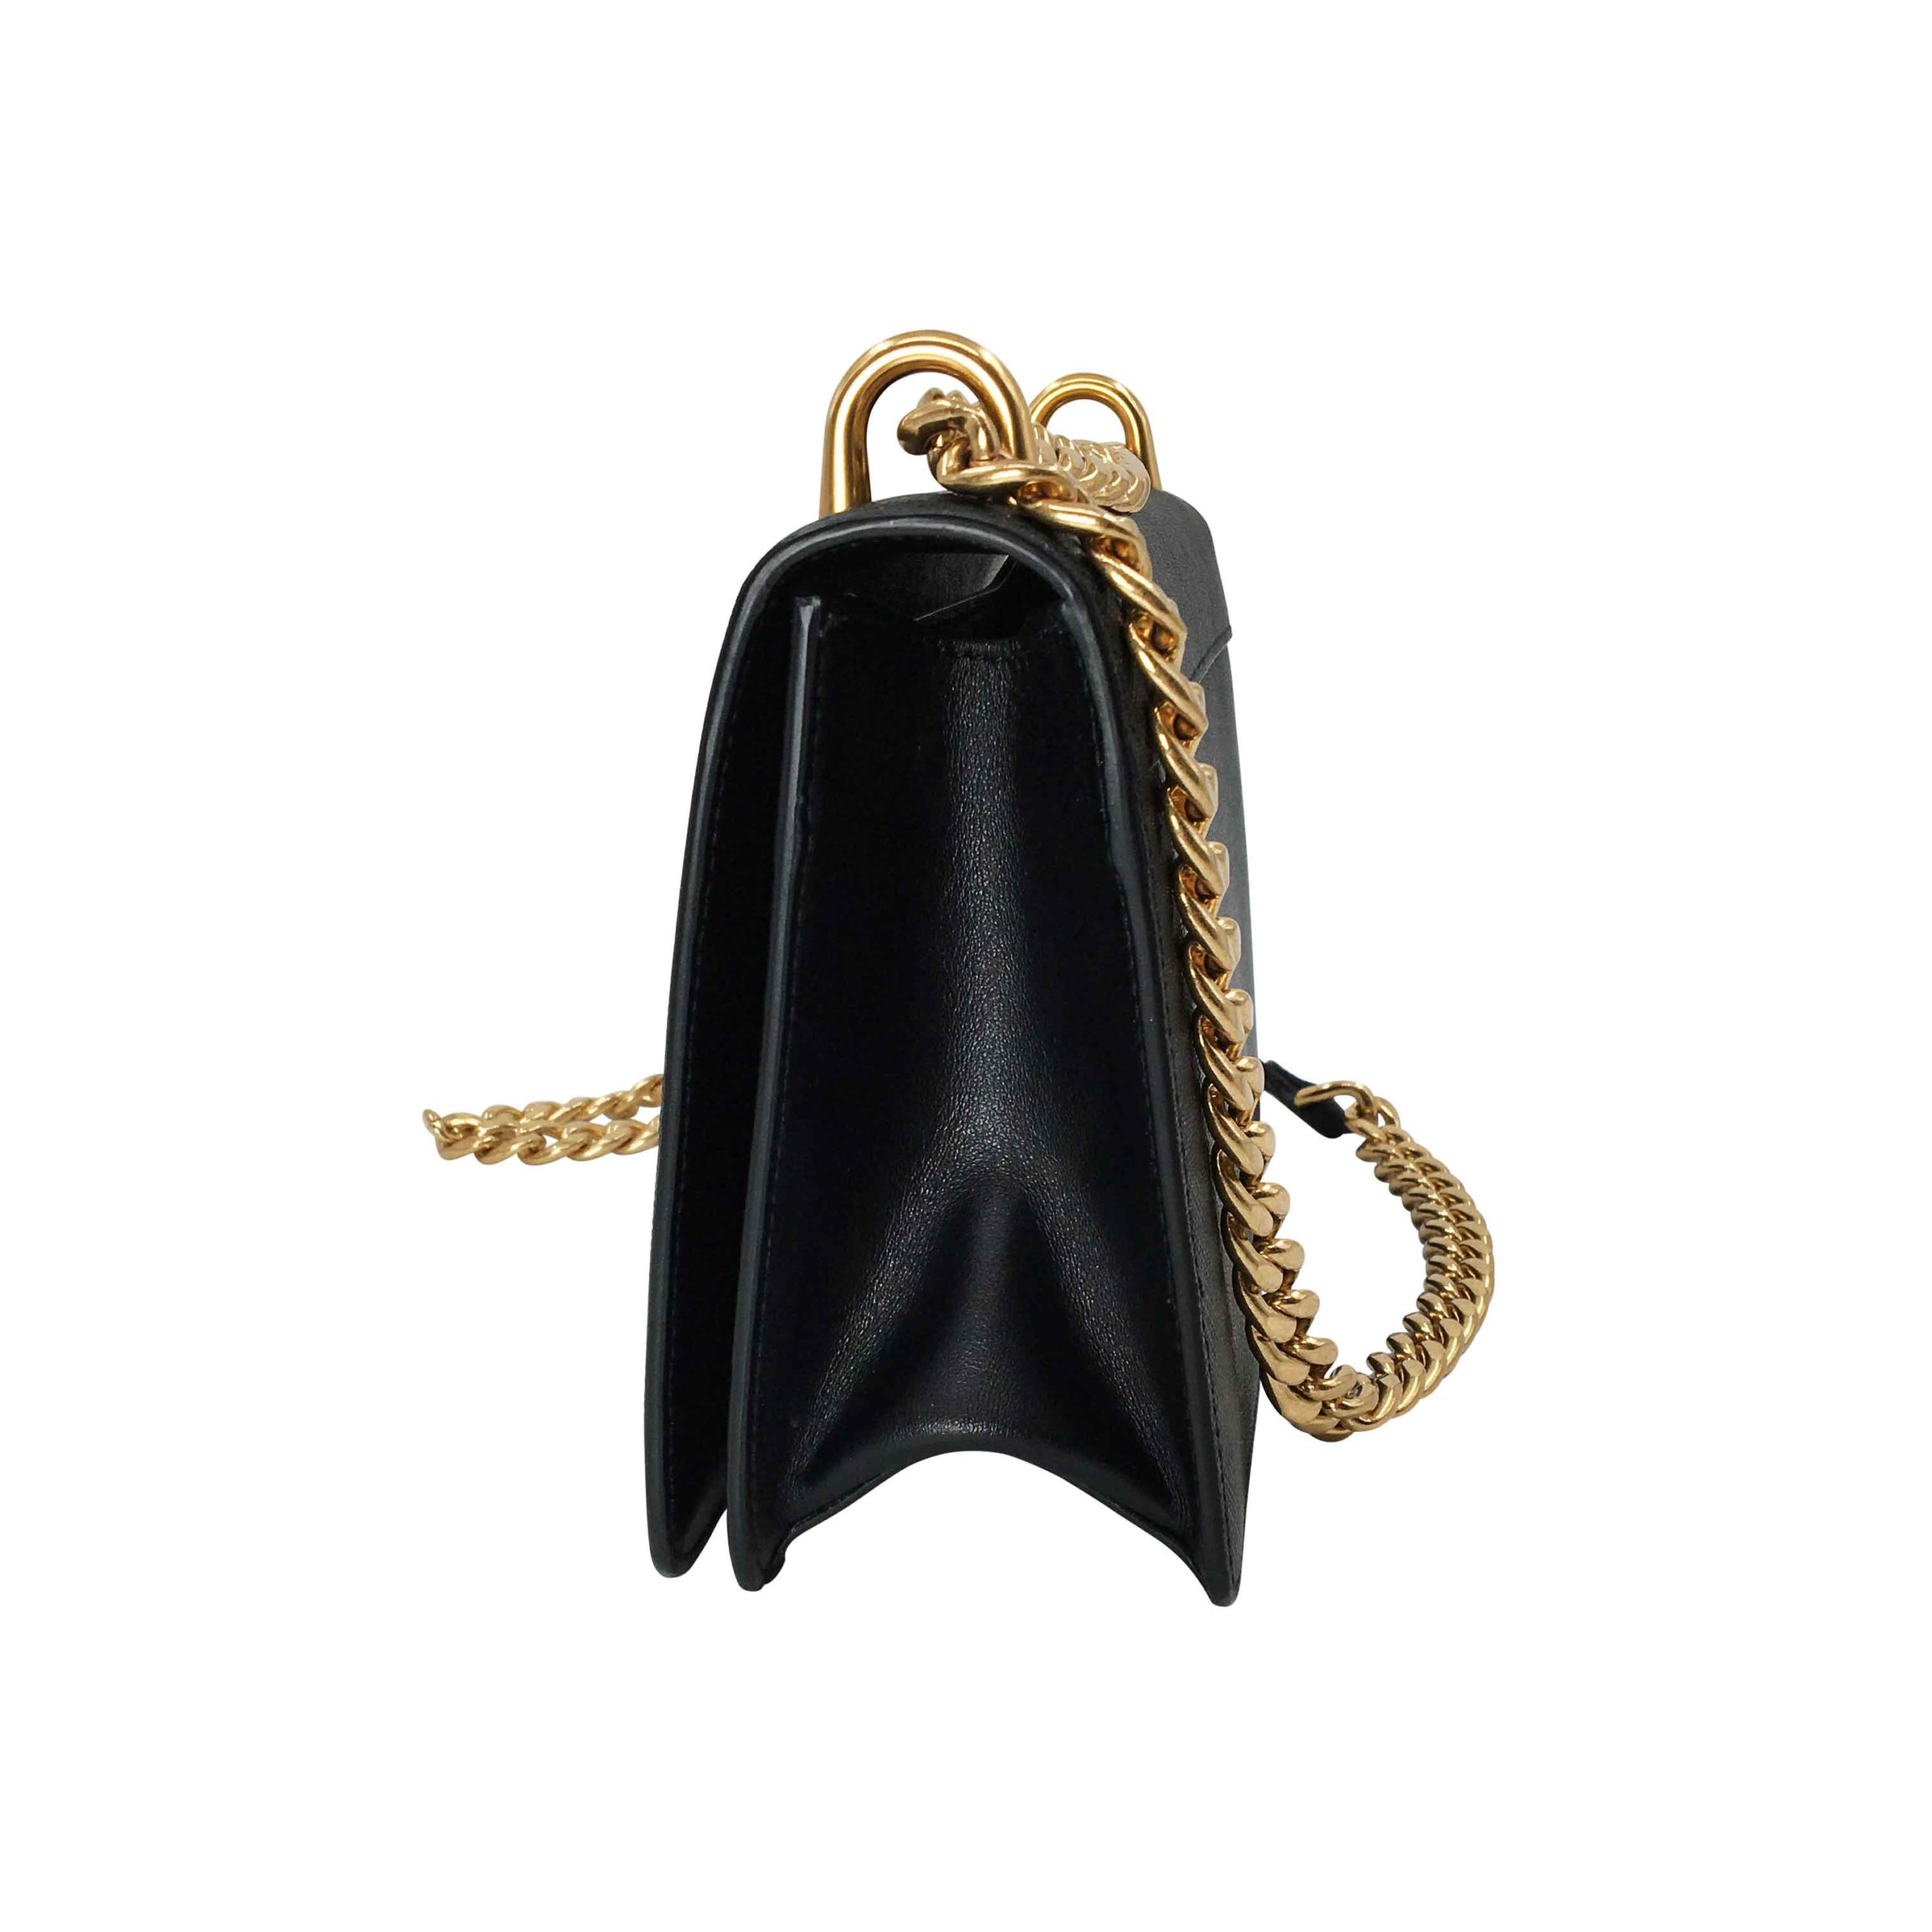 Prada Pattina mini bag in black saffiano leather GHW - DOWNTOWN UPTOWN  Genève